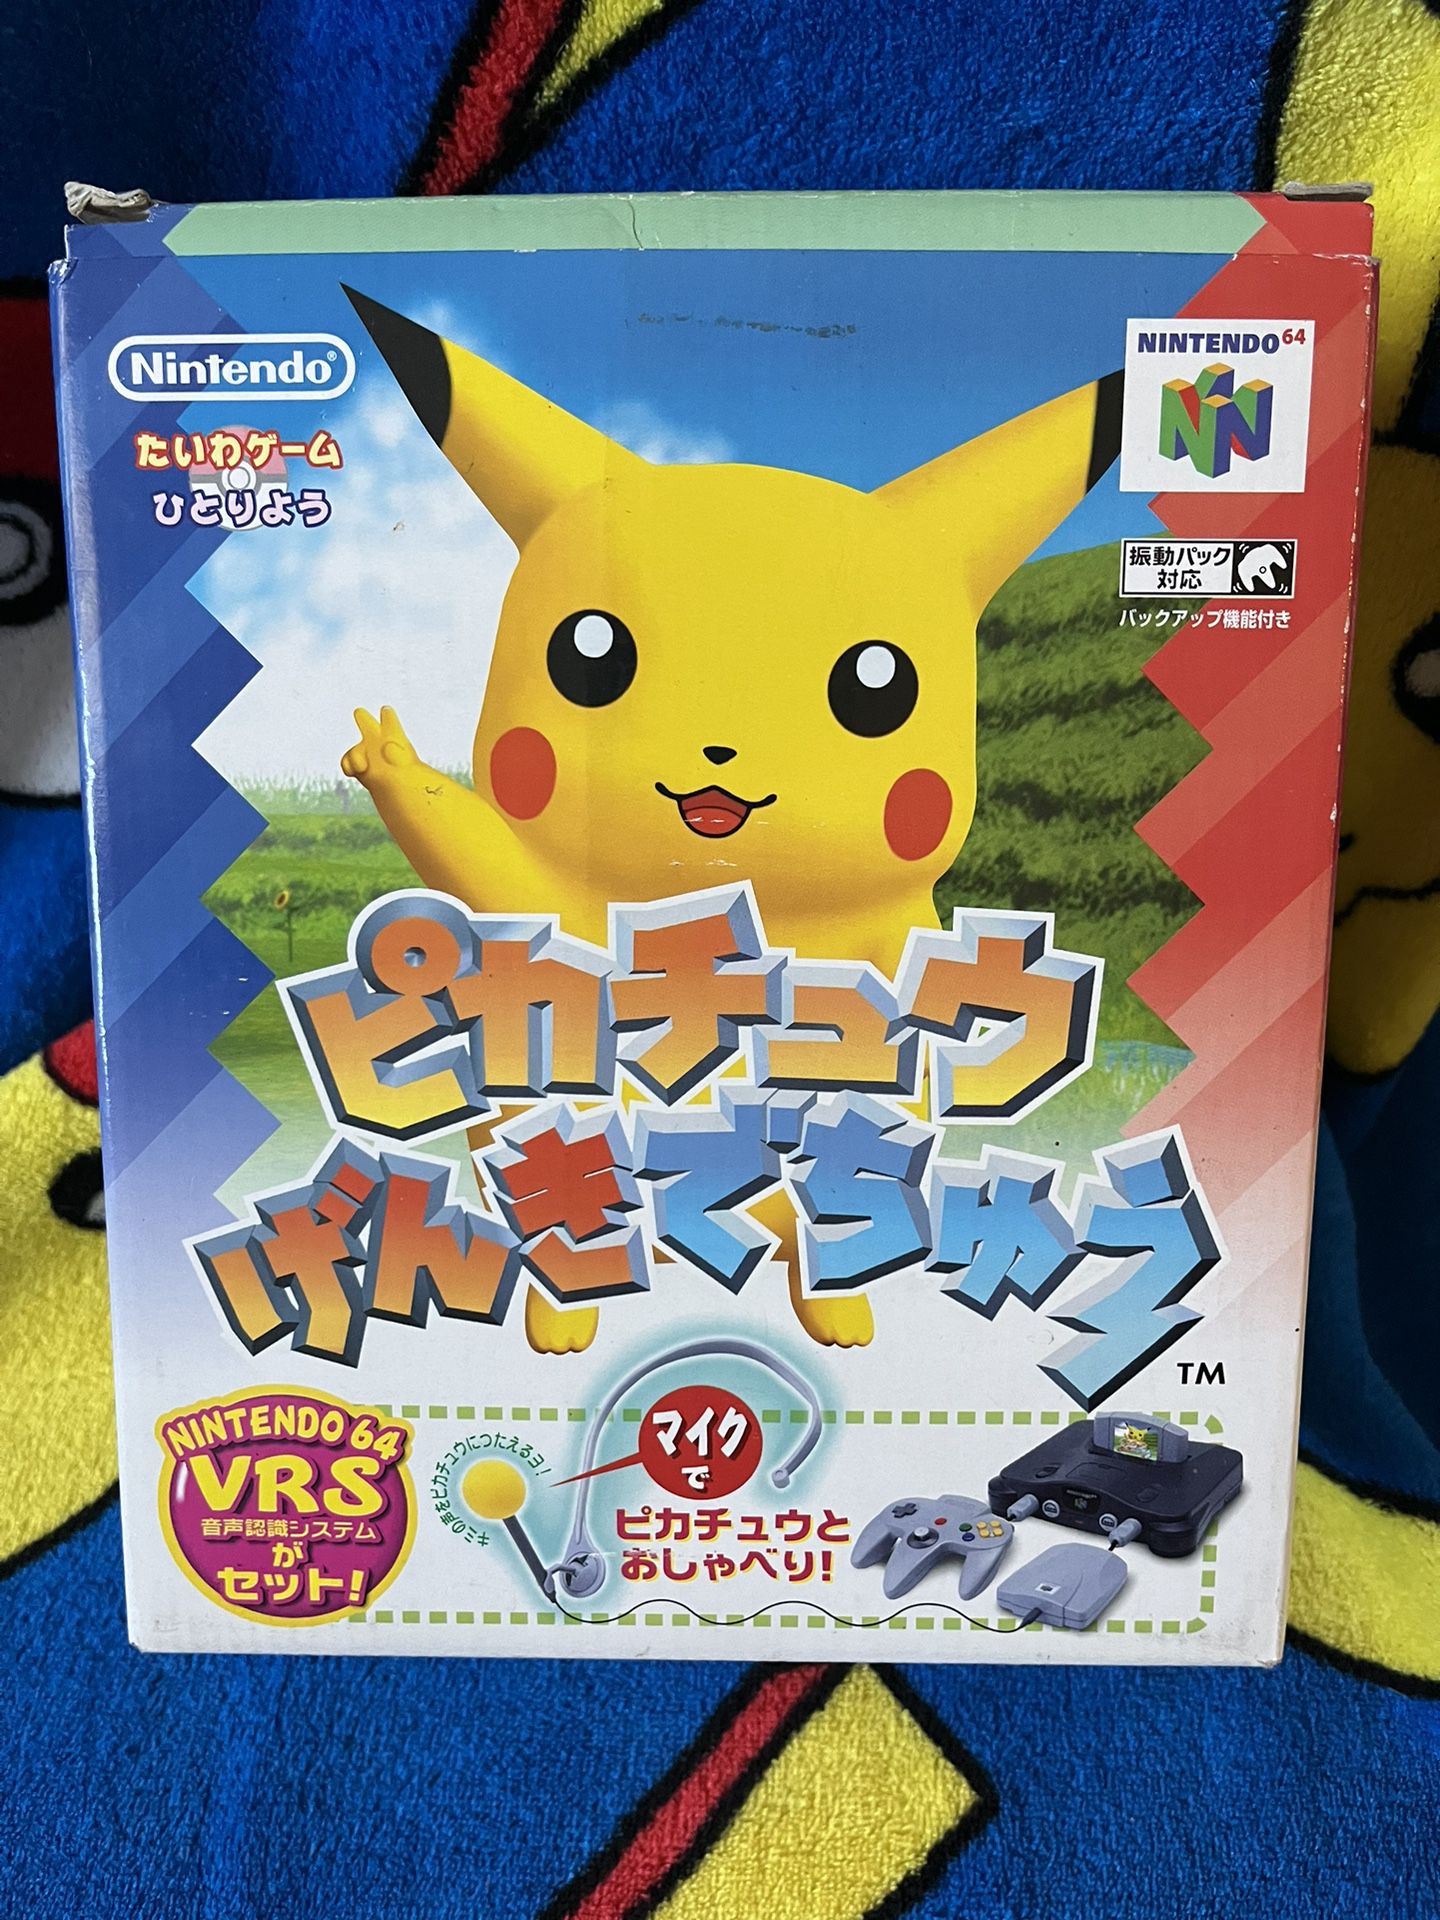 Japanese Hey you Pikachu N64